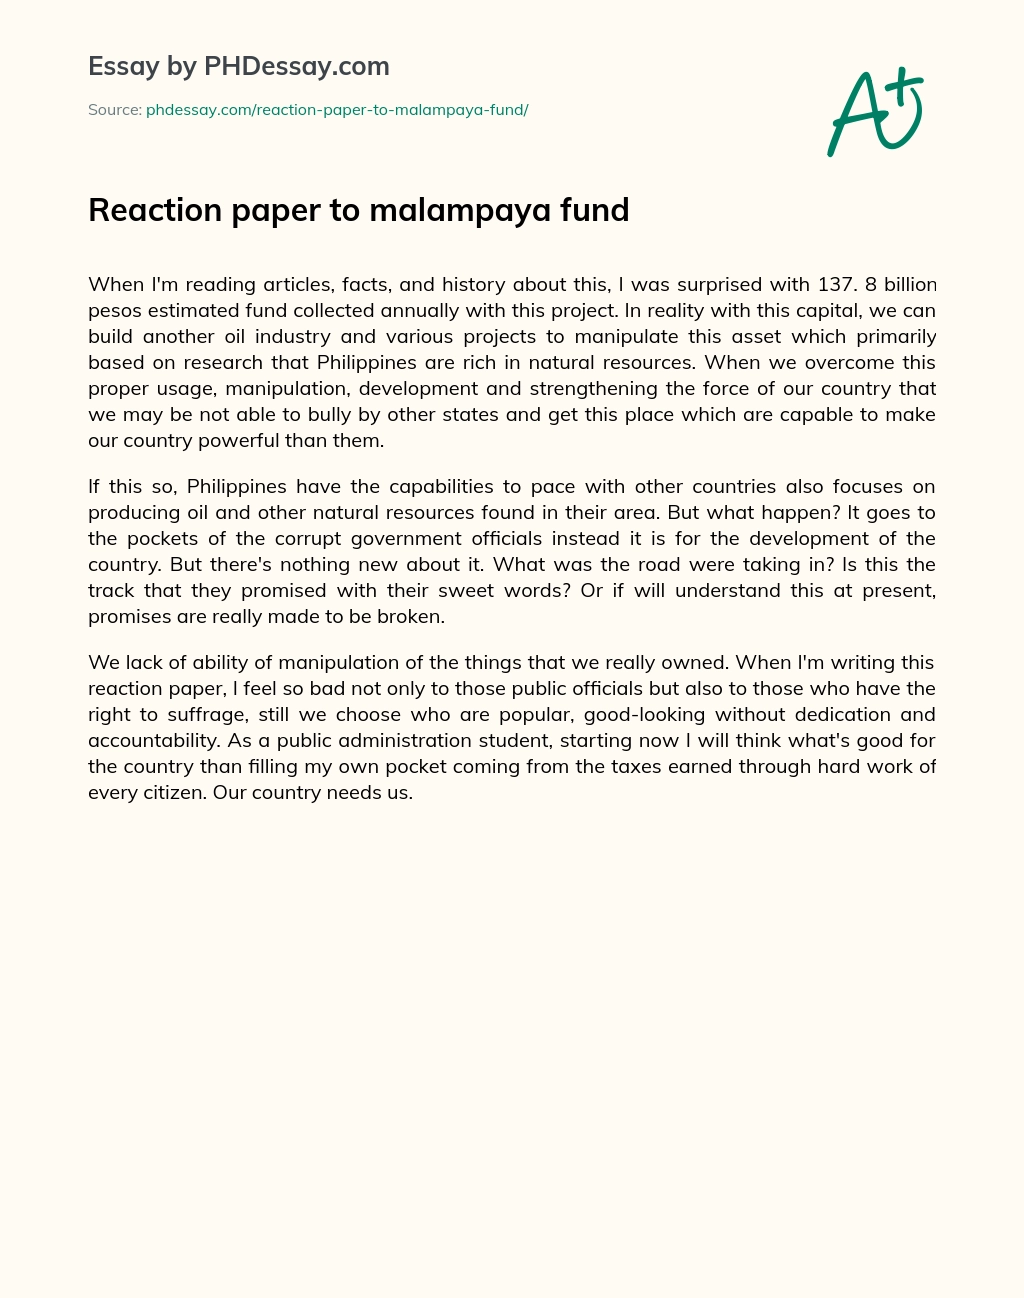 Reaction paper to malampaya fund essay